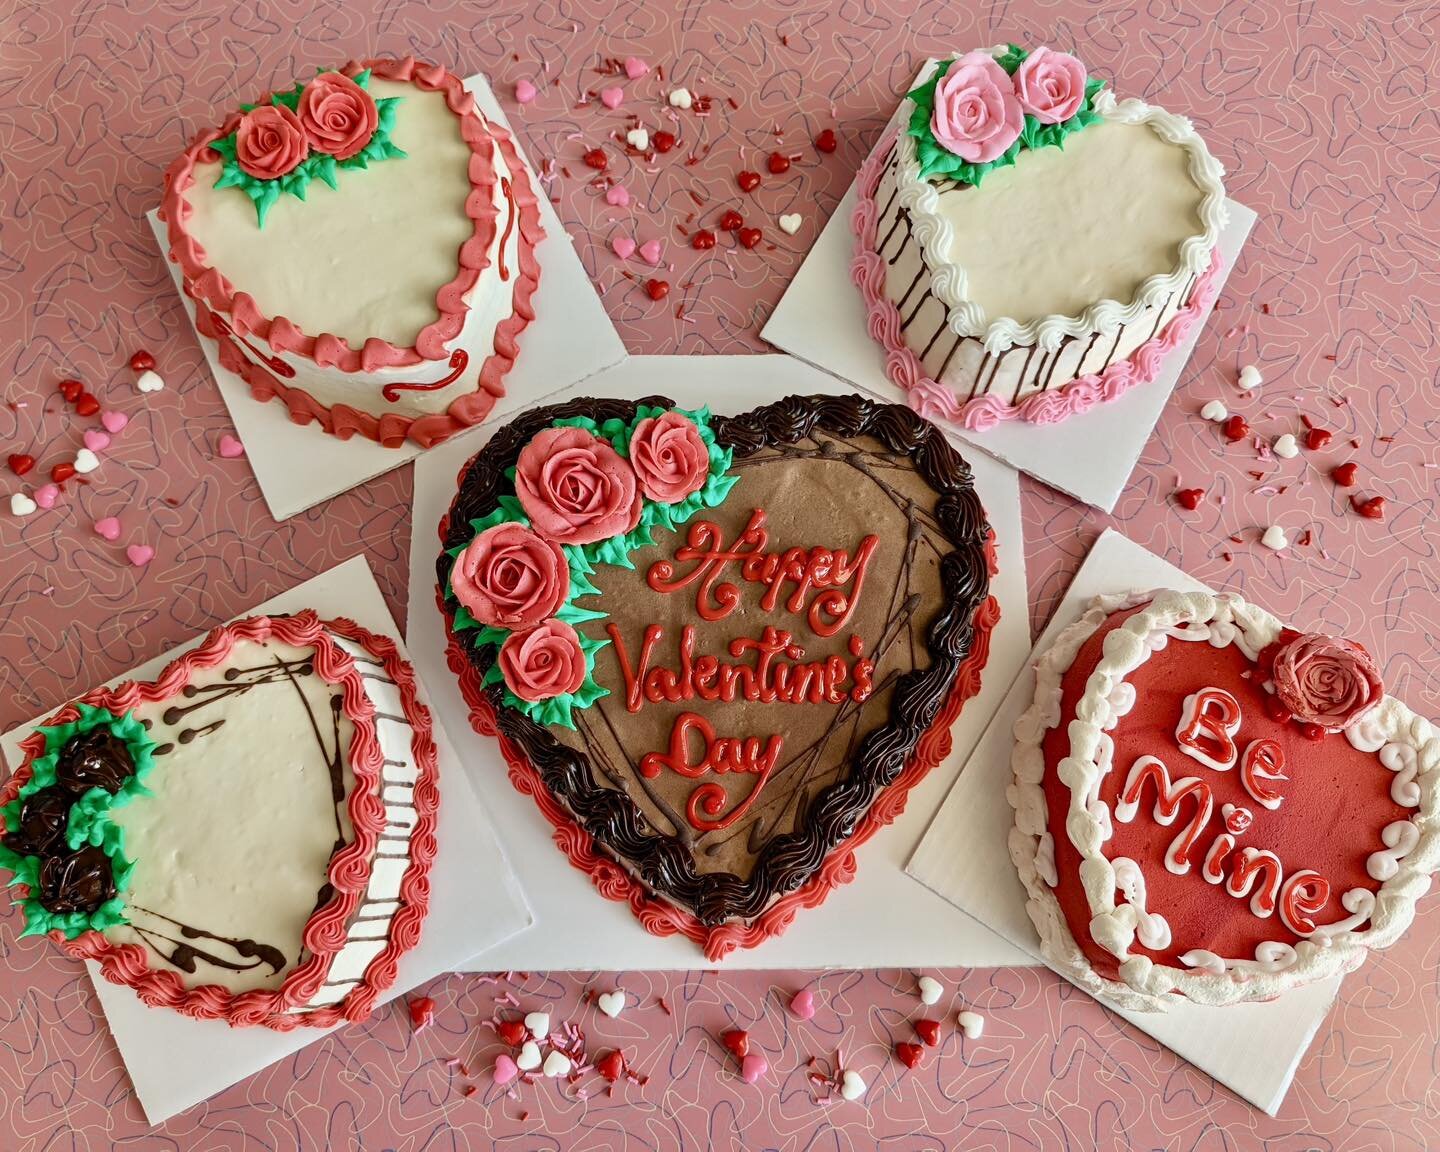 Valentine&rsquo;s Day is almost here! 💘
We have ready grab &amp; go ready ice cream cakes so you won&rsquo;t show up empty handed!

#valentinesday #icecreamcakes #london #londonontario #icecream #yummy #ldnont #merlamaeicecream #ldn #ldnontario #mer